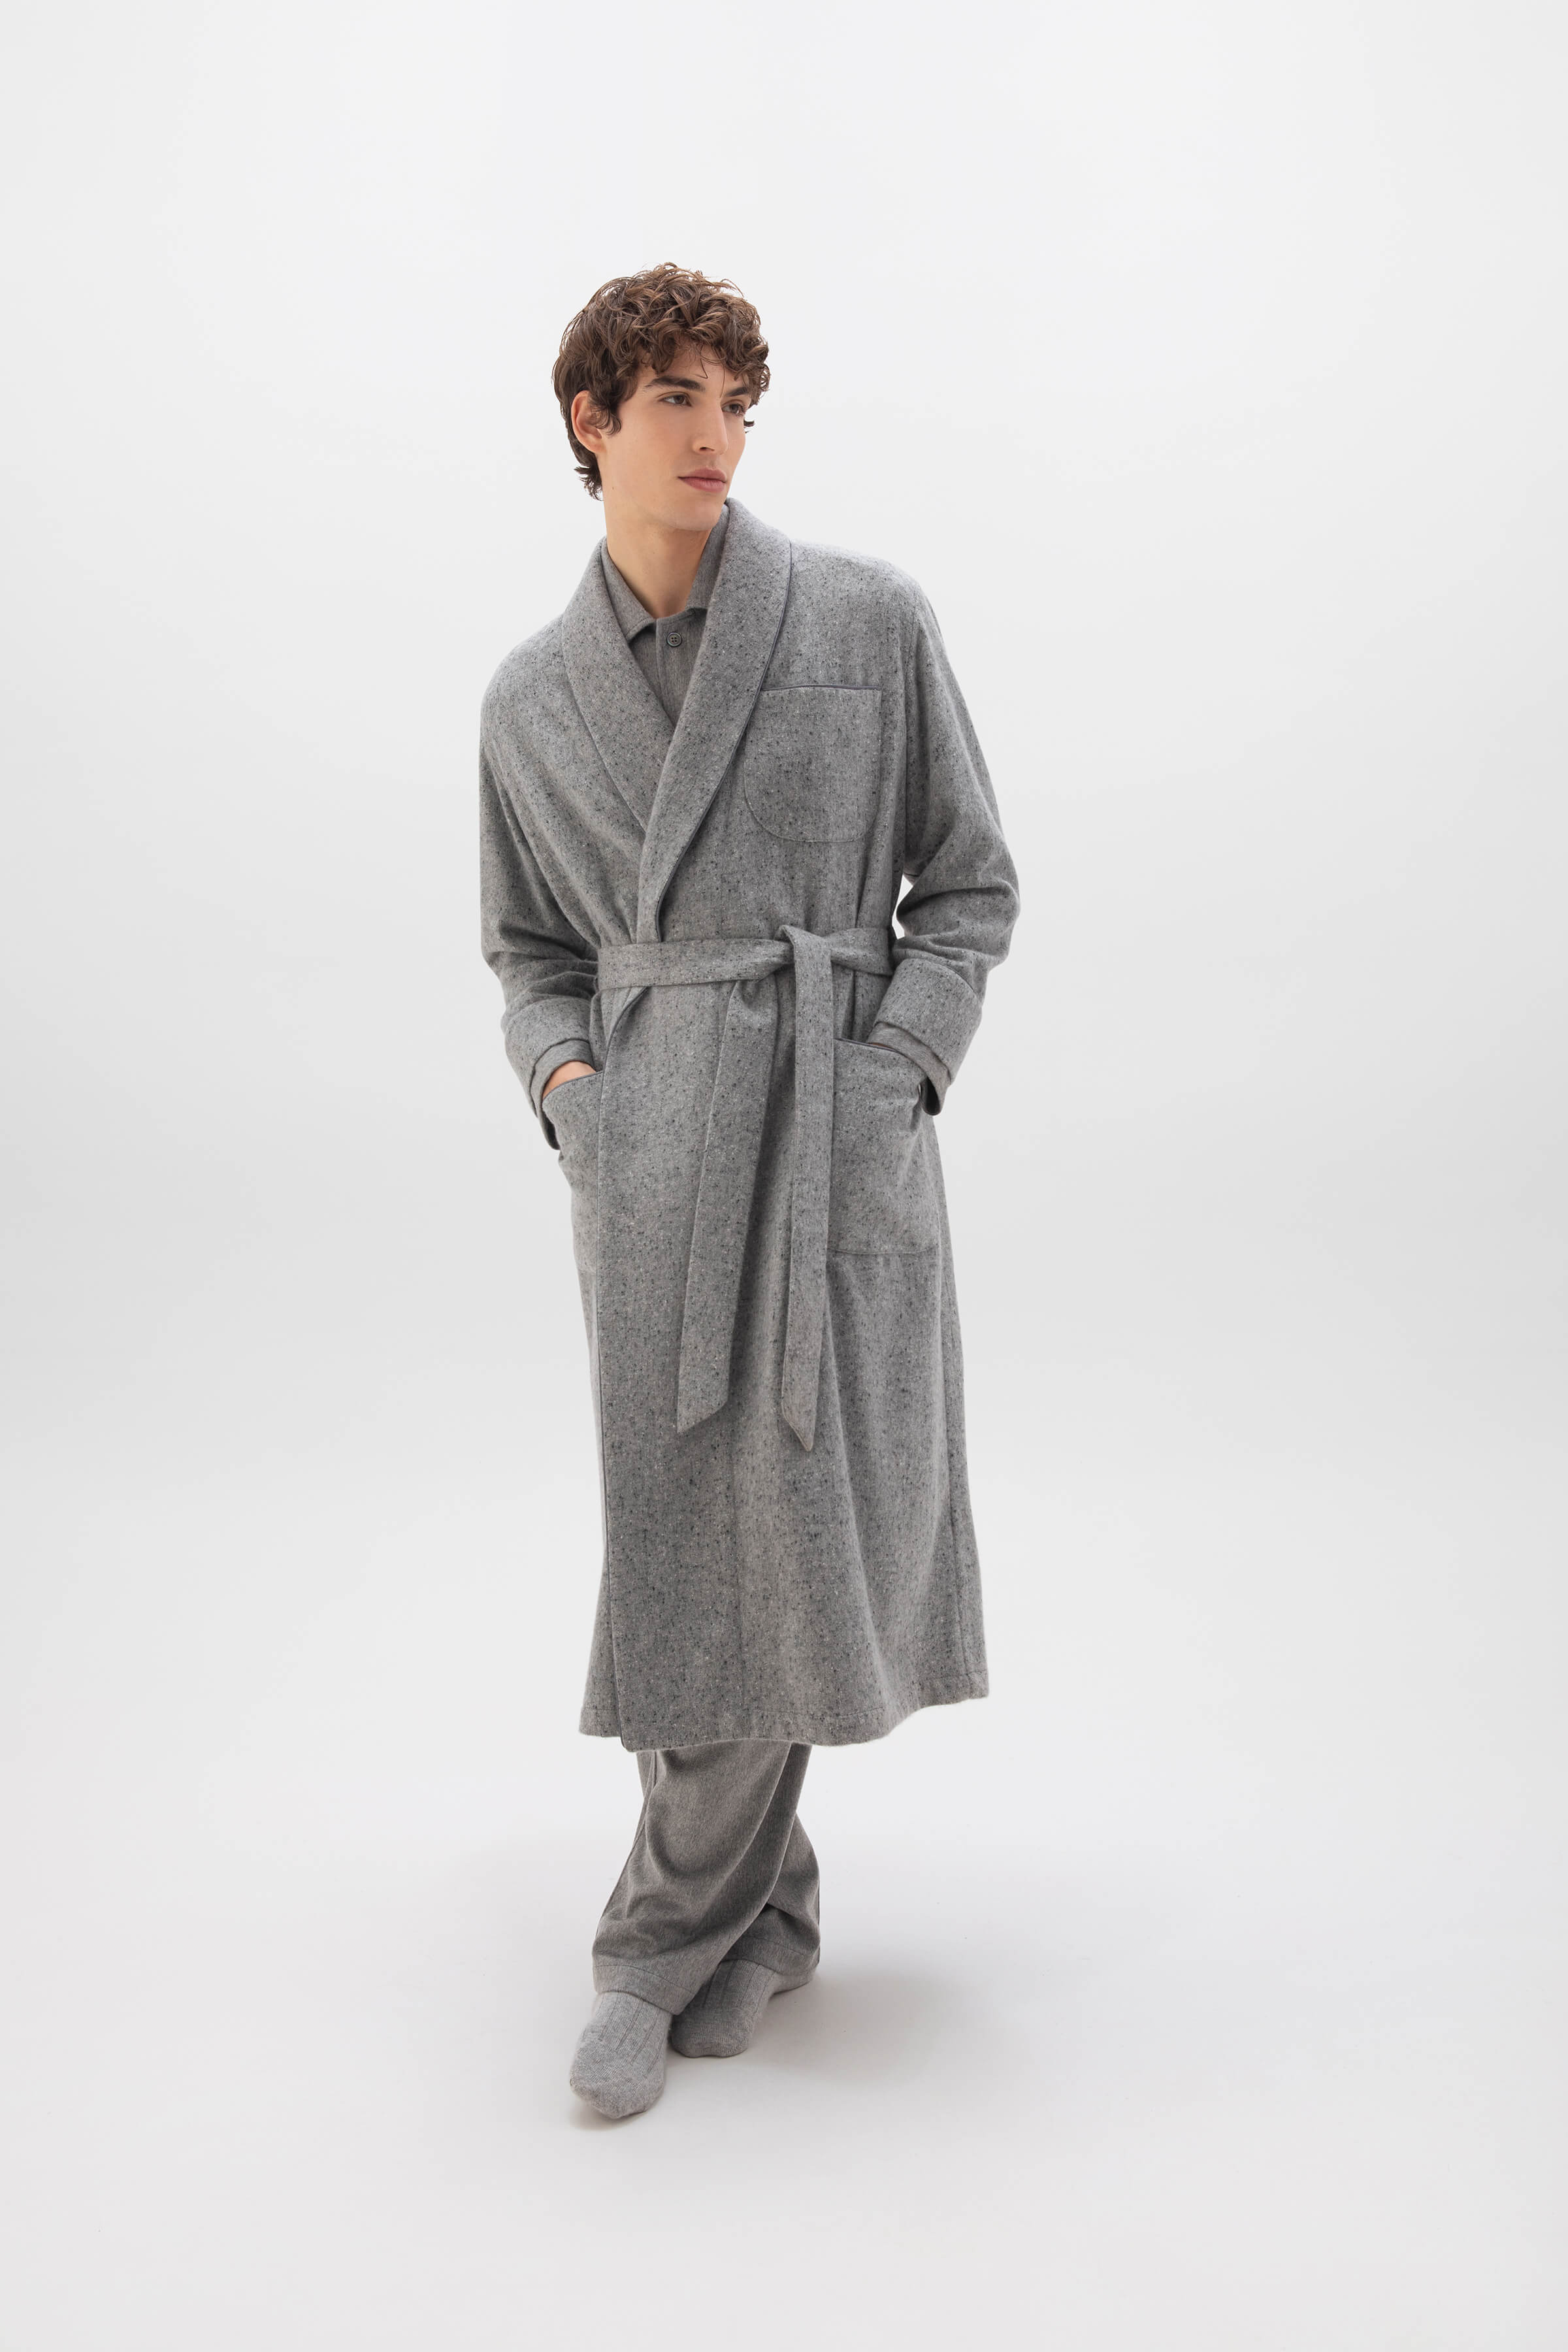 Mens Dressing Gown Luxury Bath Robe Super Soft Long Sleeve Warm Fleece  Housecoat | eBay